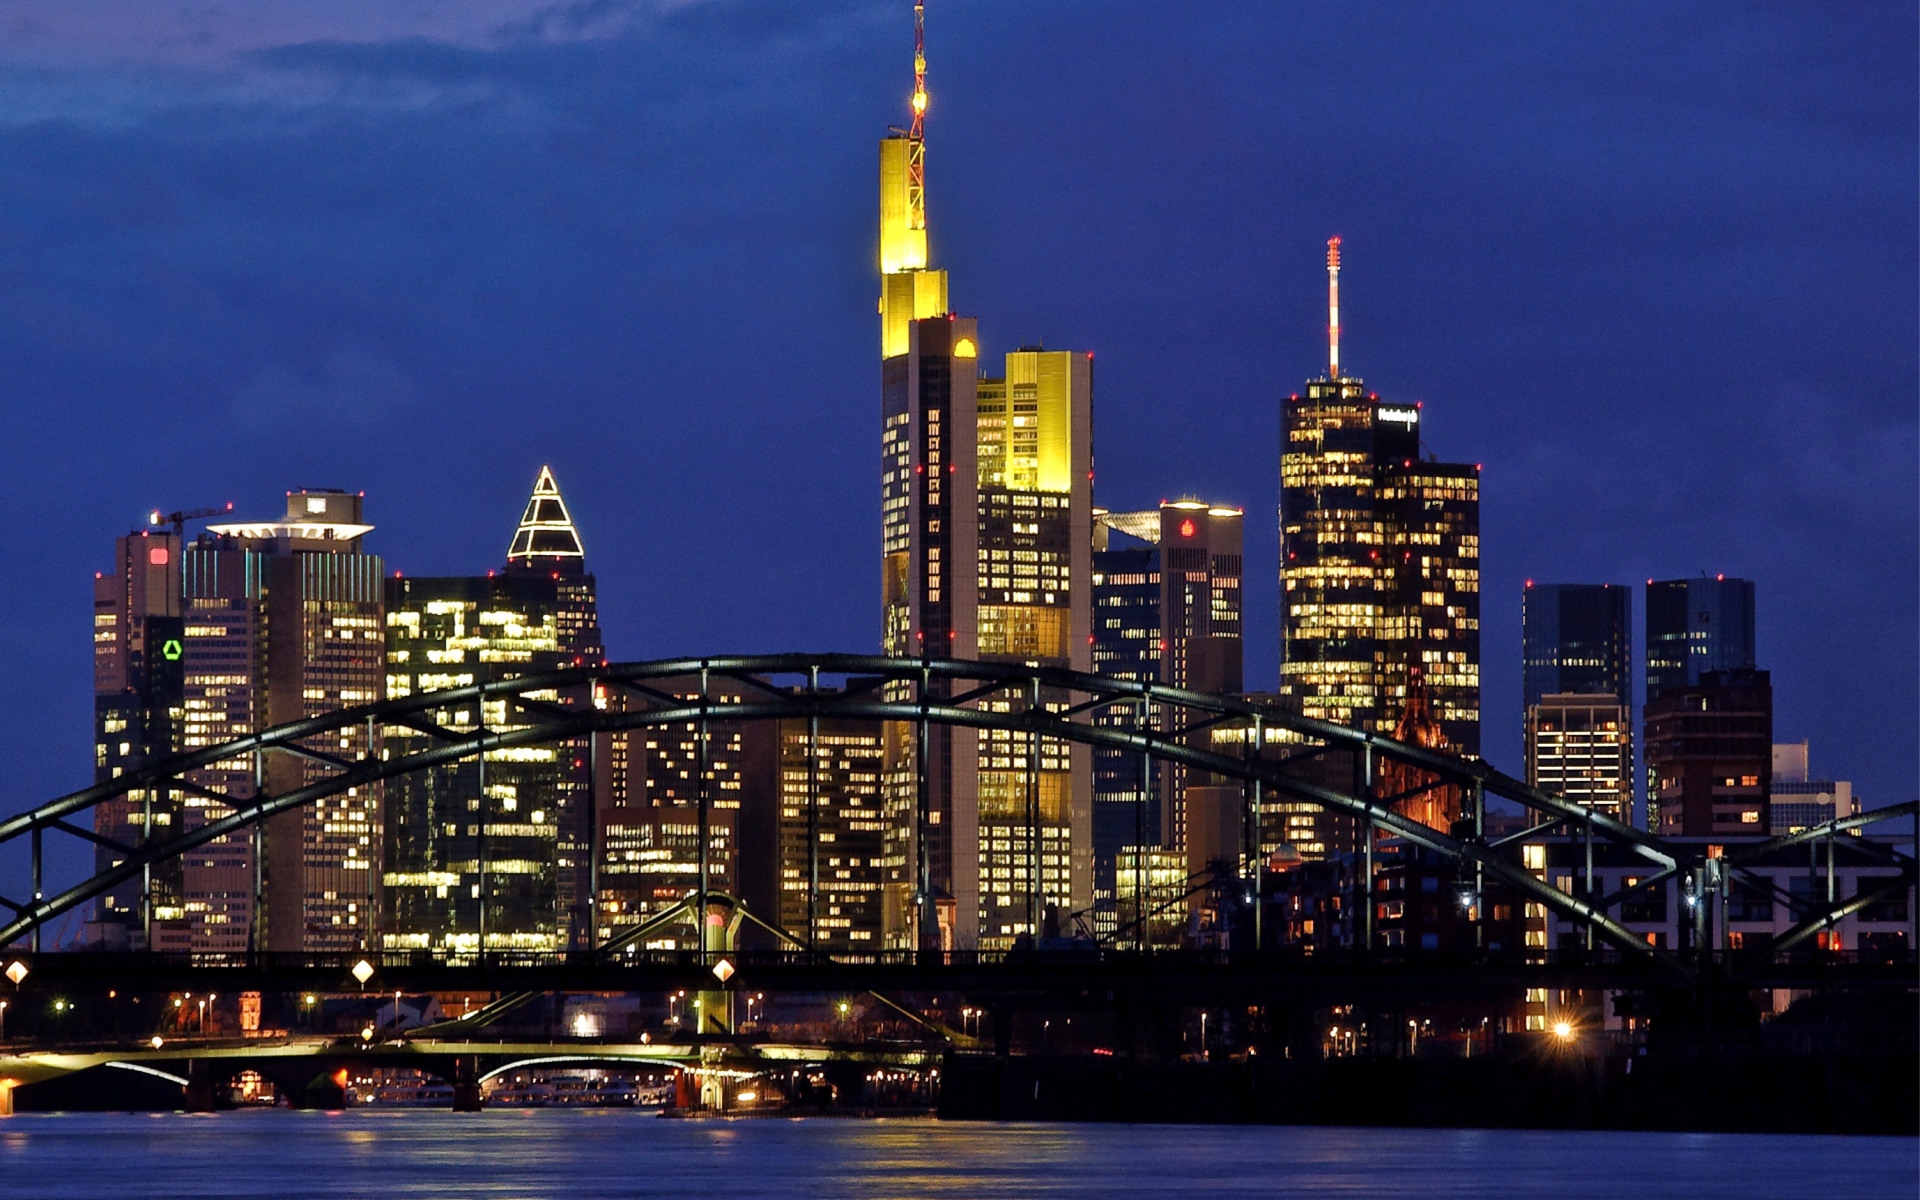 Картинки Германия, Франкфурт-на-Майне, вечер, метрополис, небоскребы, фары, мост, река фото и обои на рабочий стол